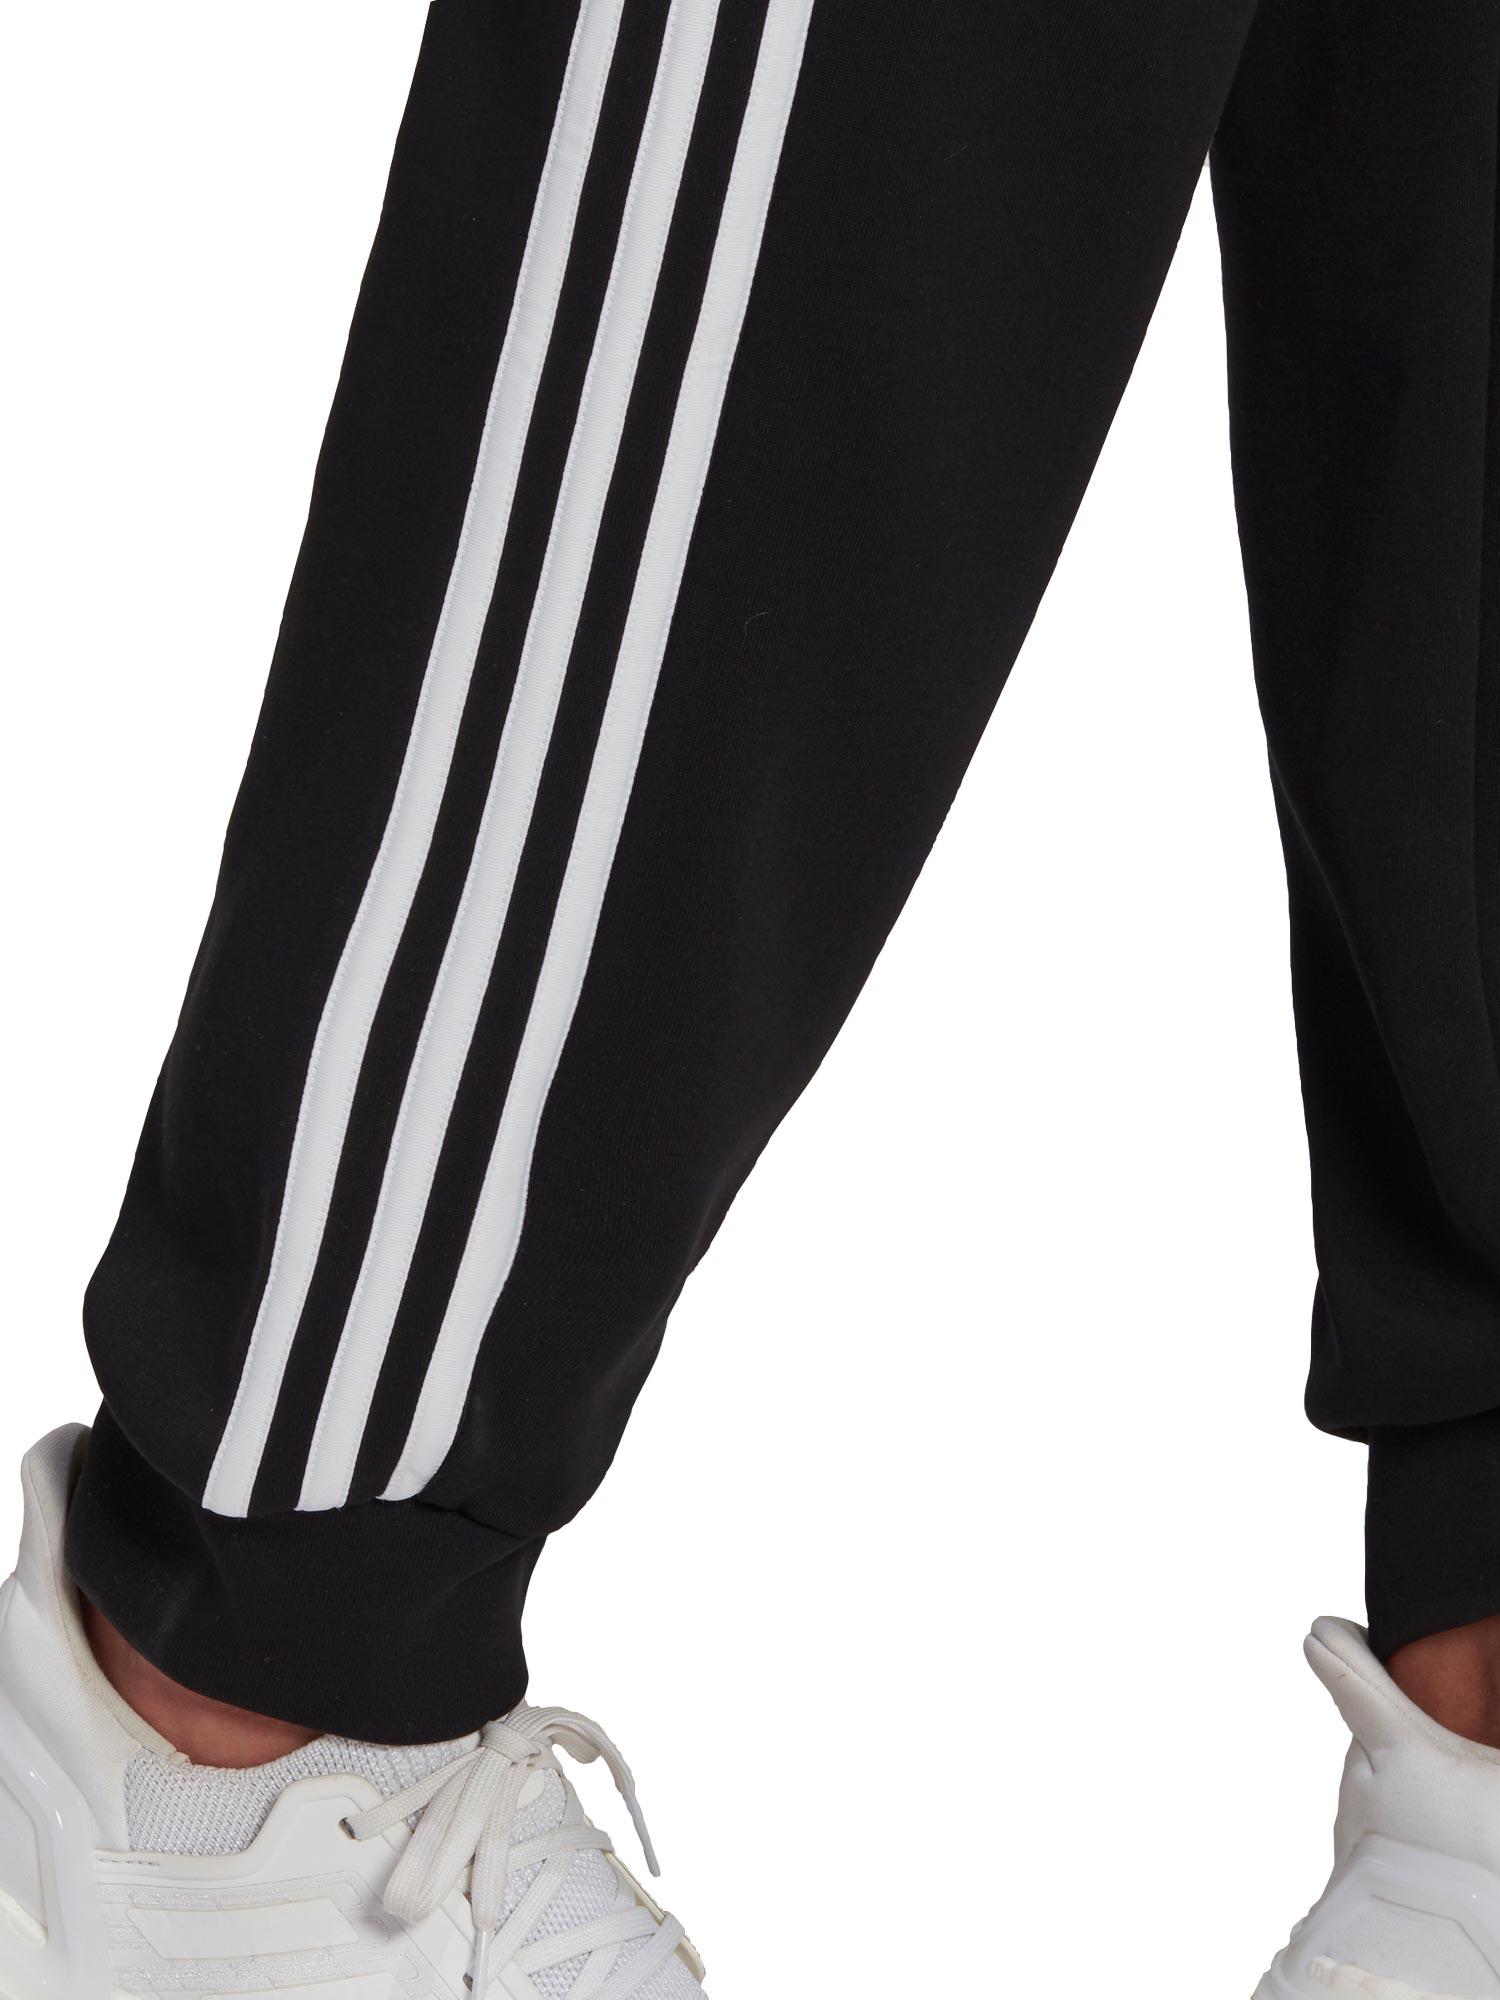 Slike ADIDAS Muški donji deo trenerke Sportswear Future Icons 3-S Pants crni